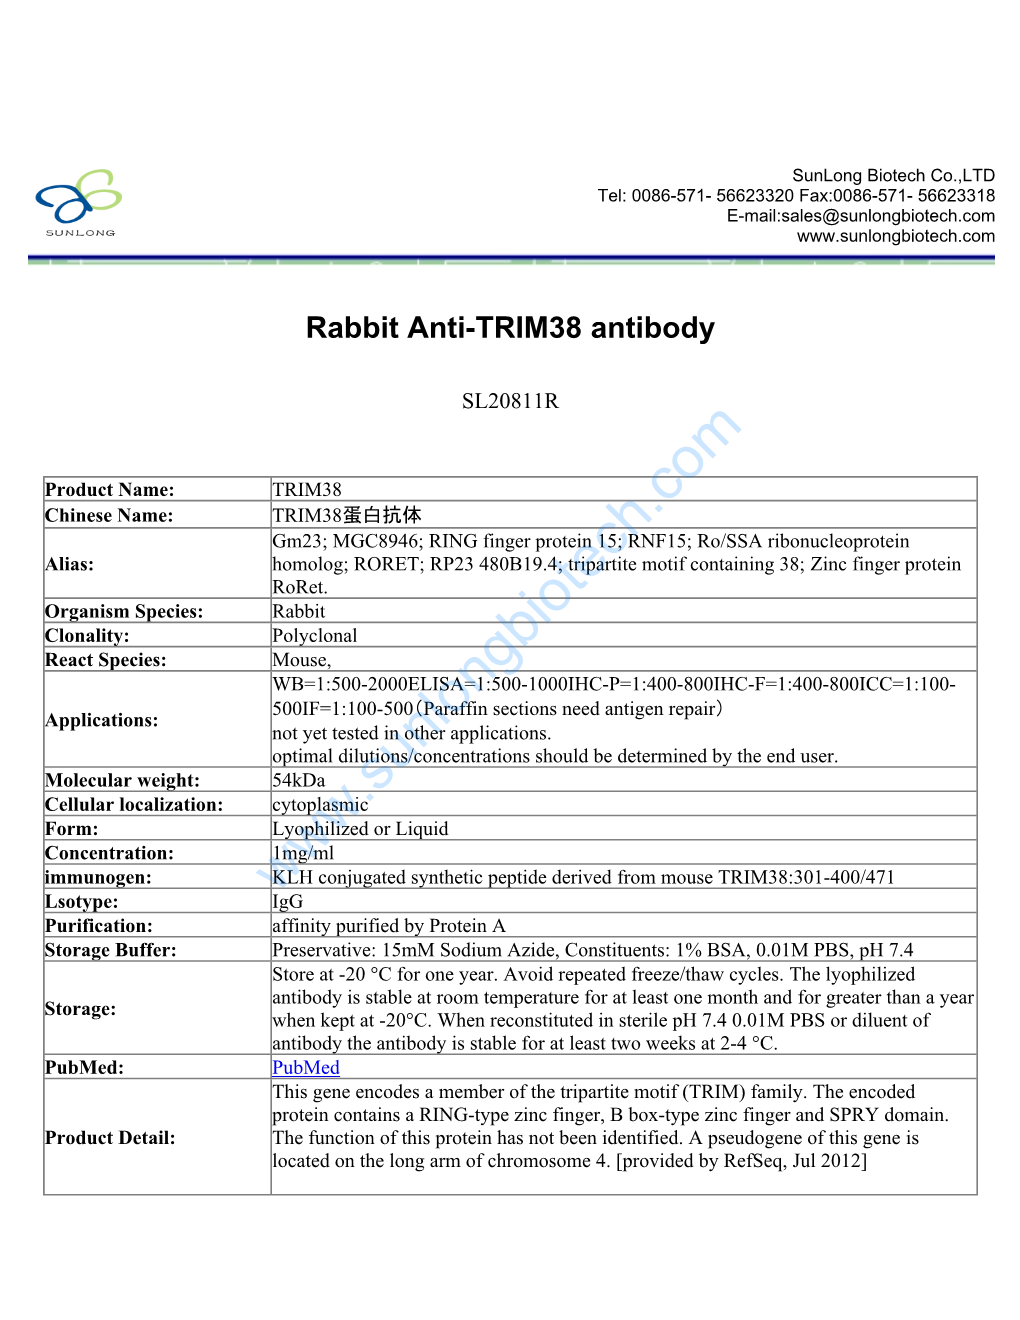 Rabbit Anti-TRIM38 Antibody-SL20811R